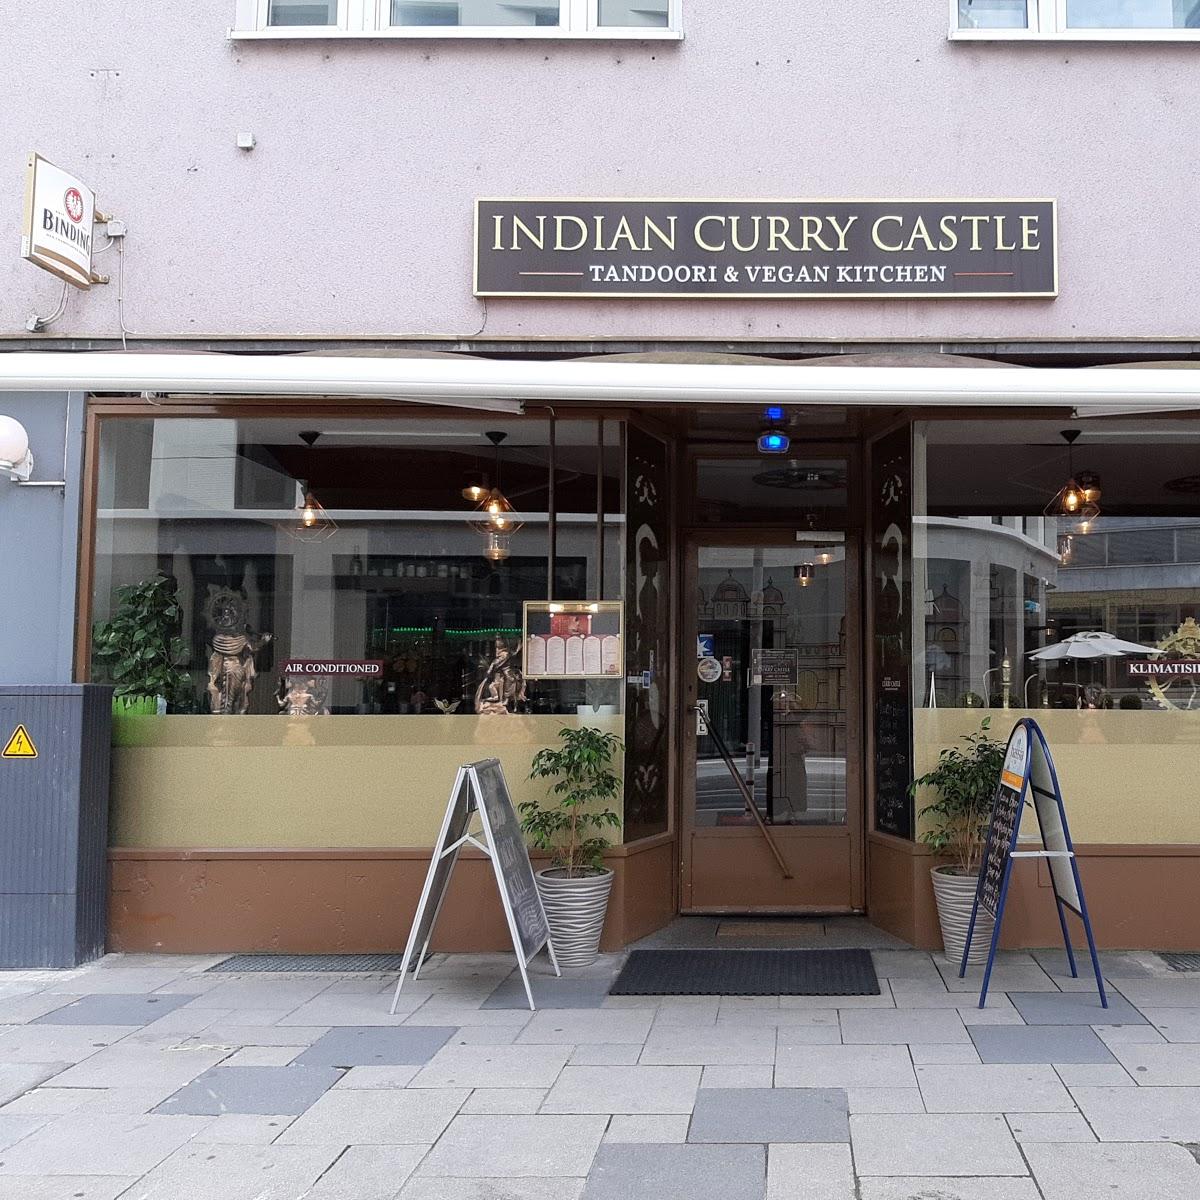 Restaurant "Indian Curry Castle" in Frankfurt am Main